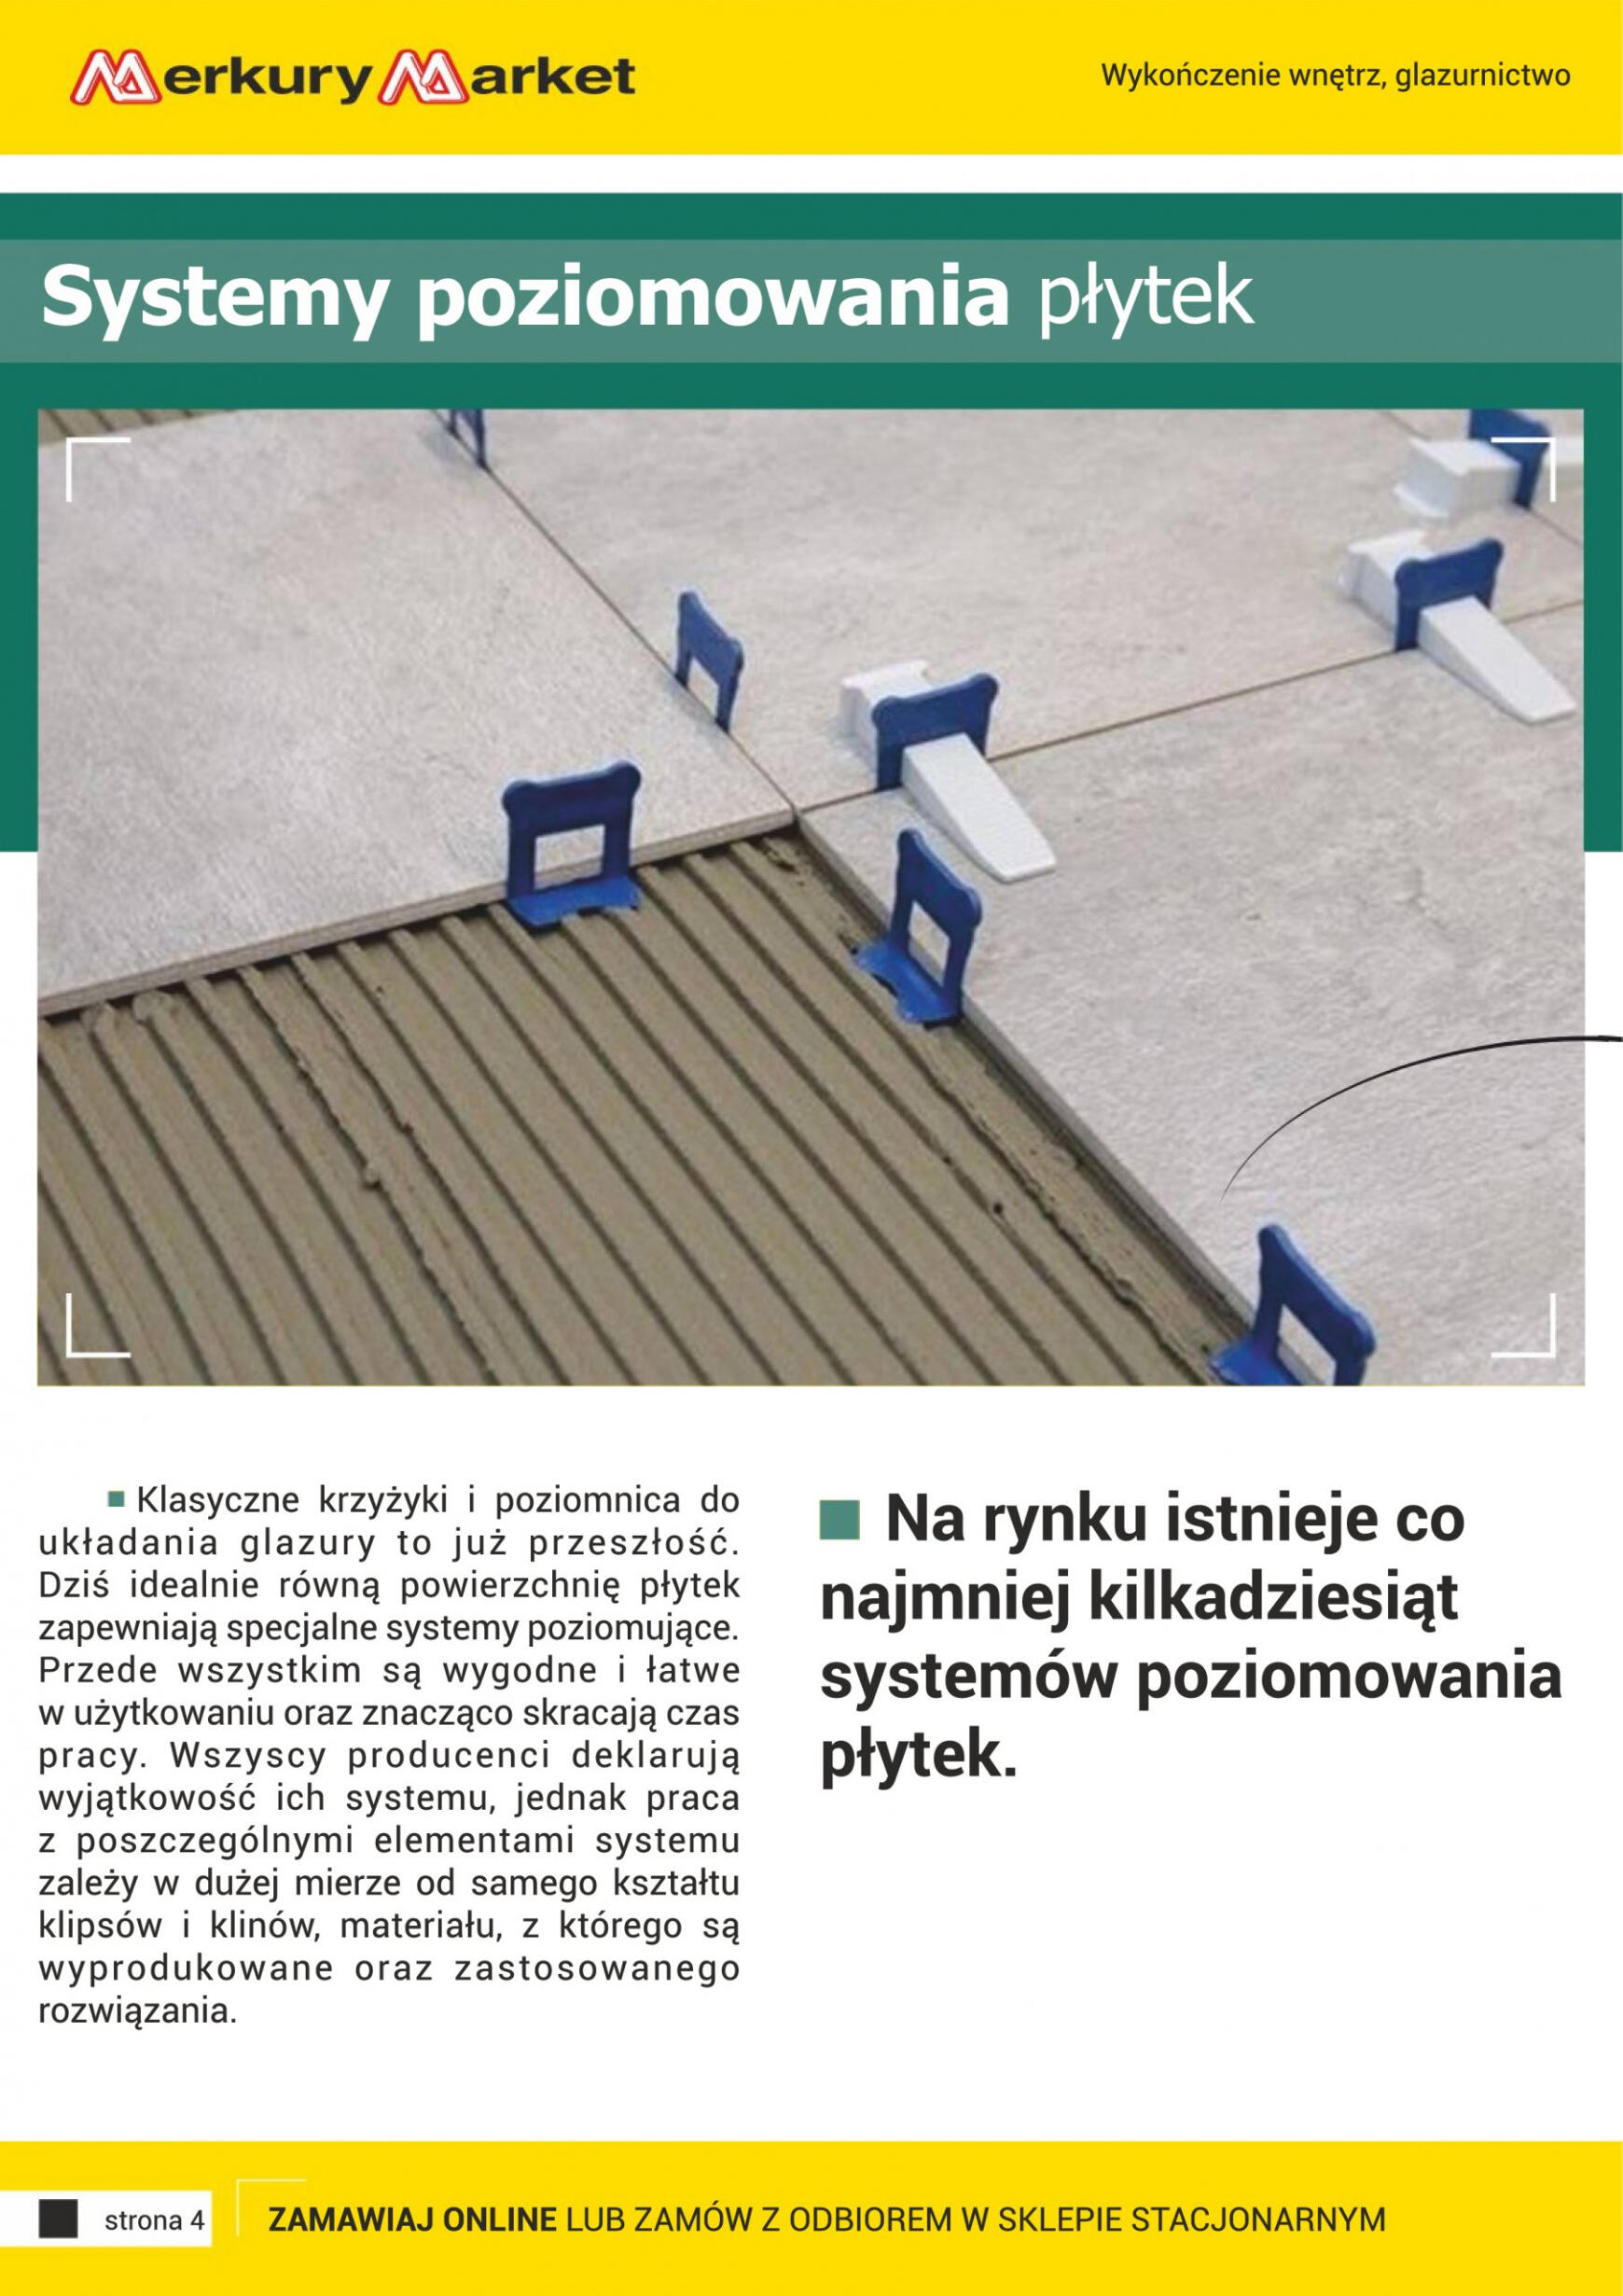 merkury-market - Merkury Market - Glazurnictwo - page: 4